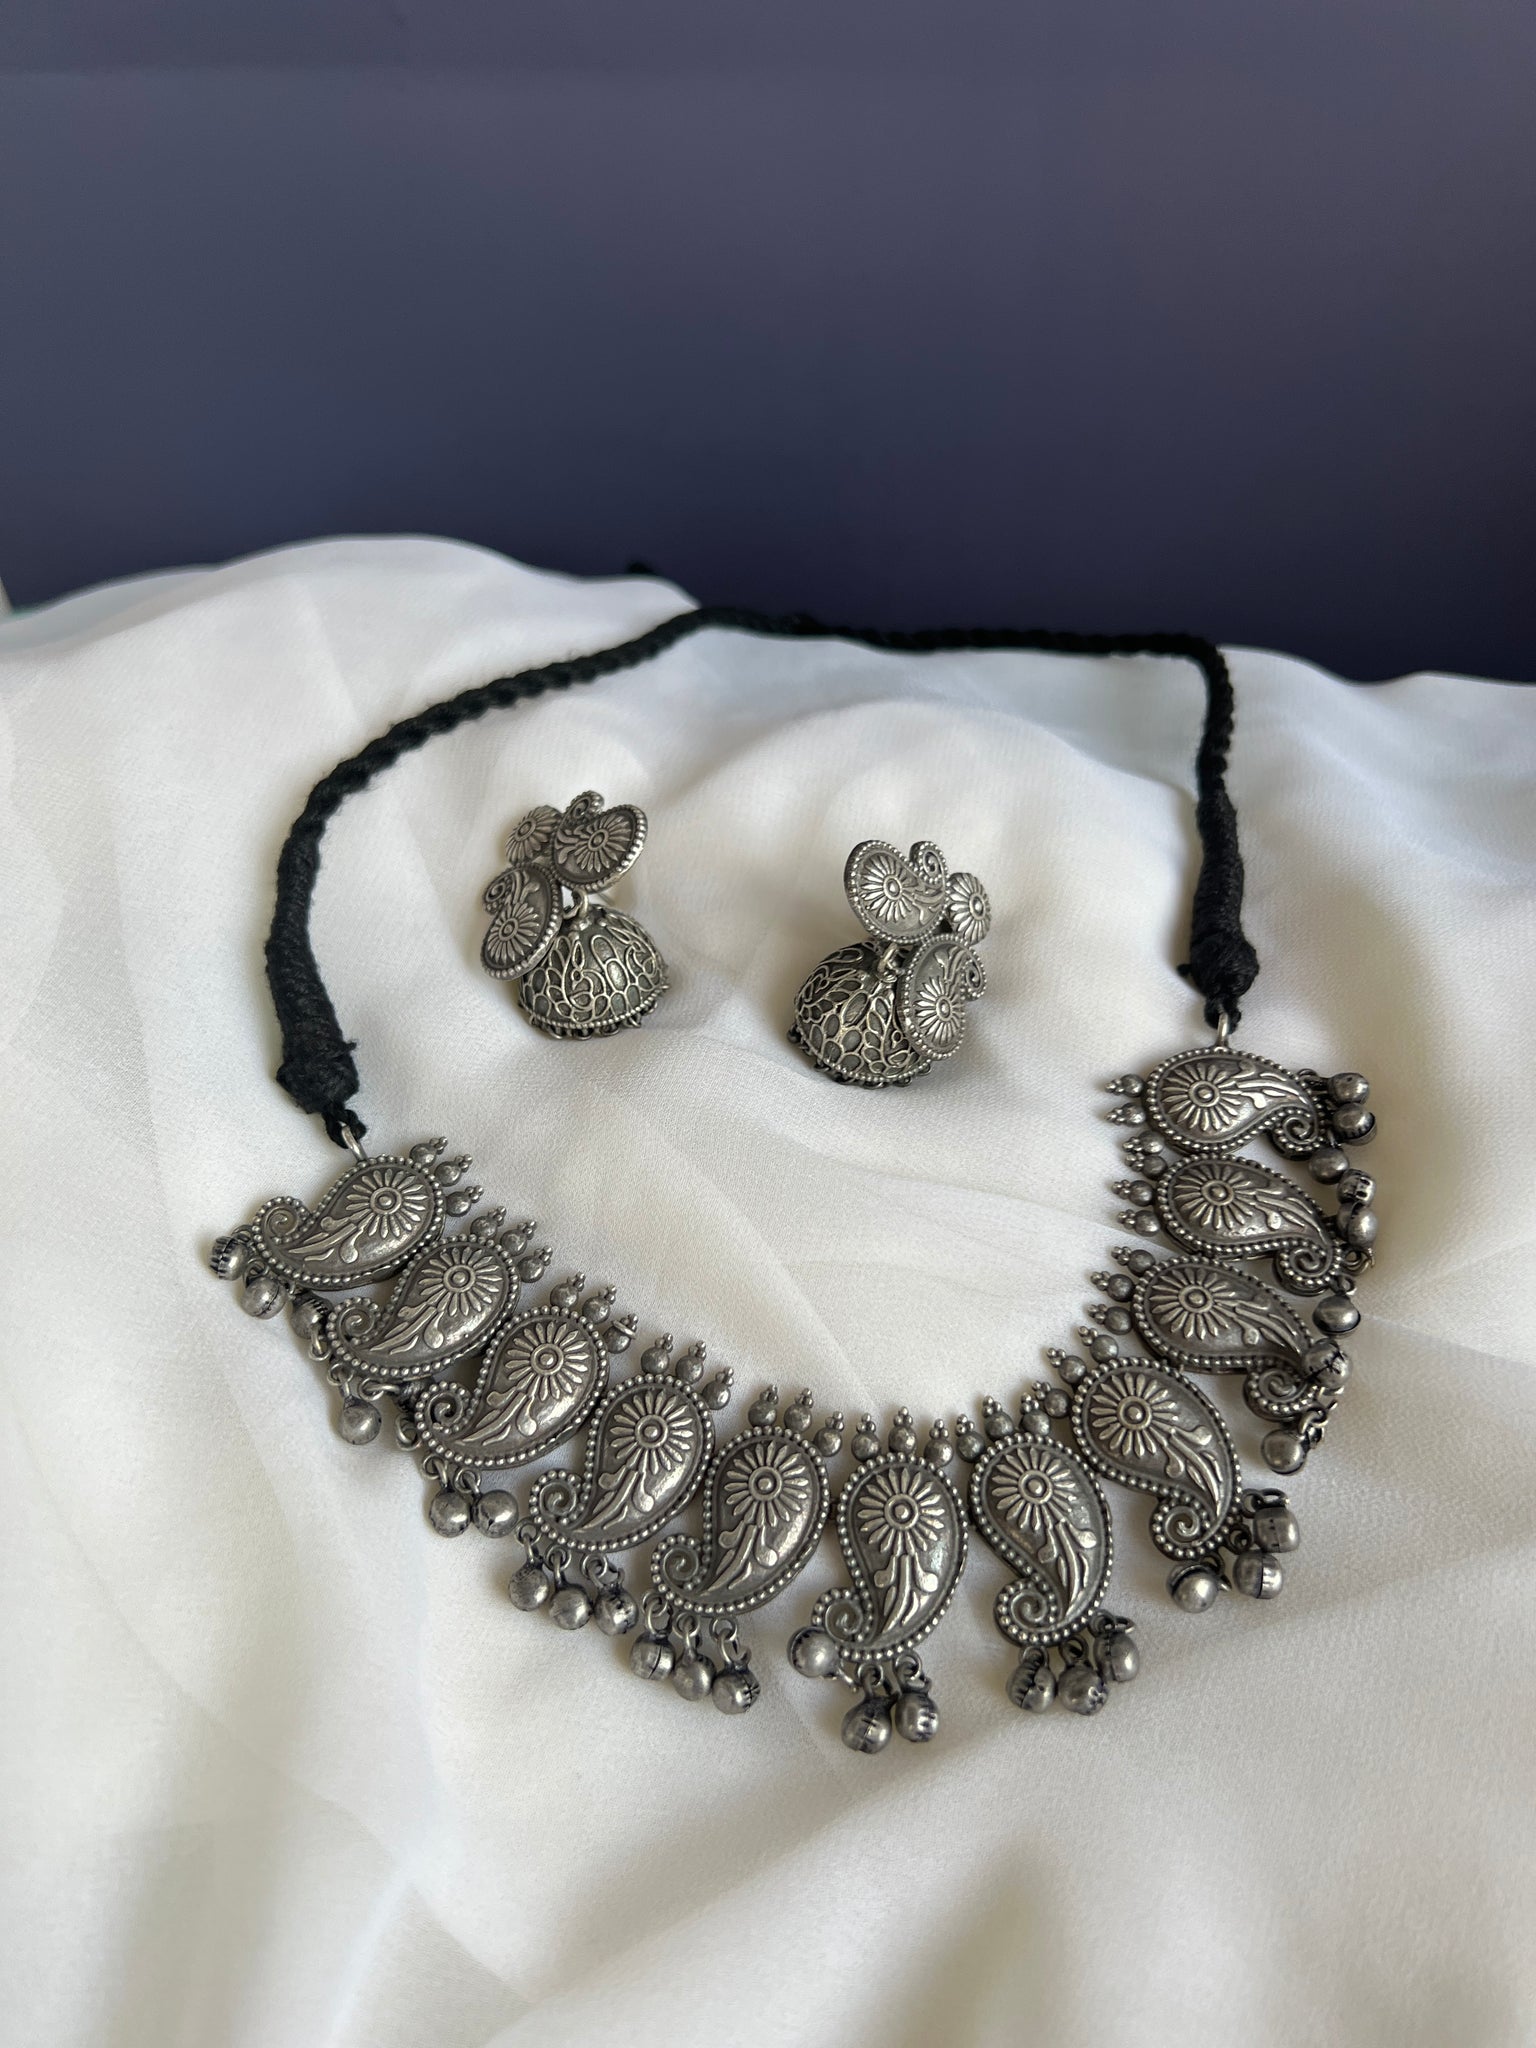 Oxidised manga necklace with jhumkas